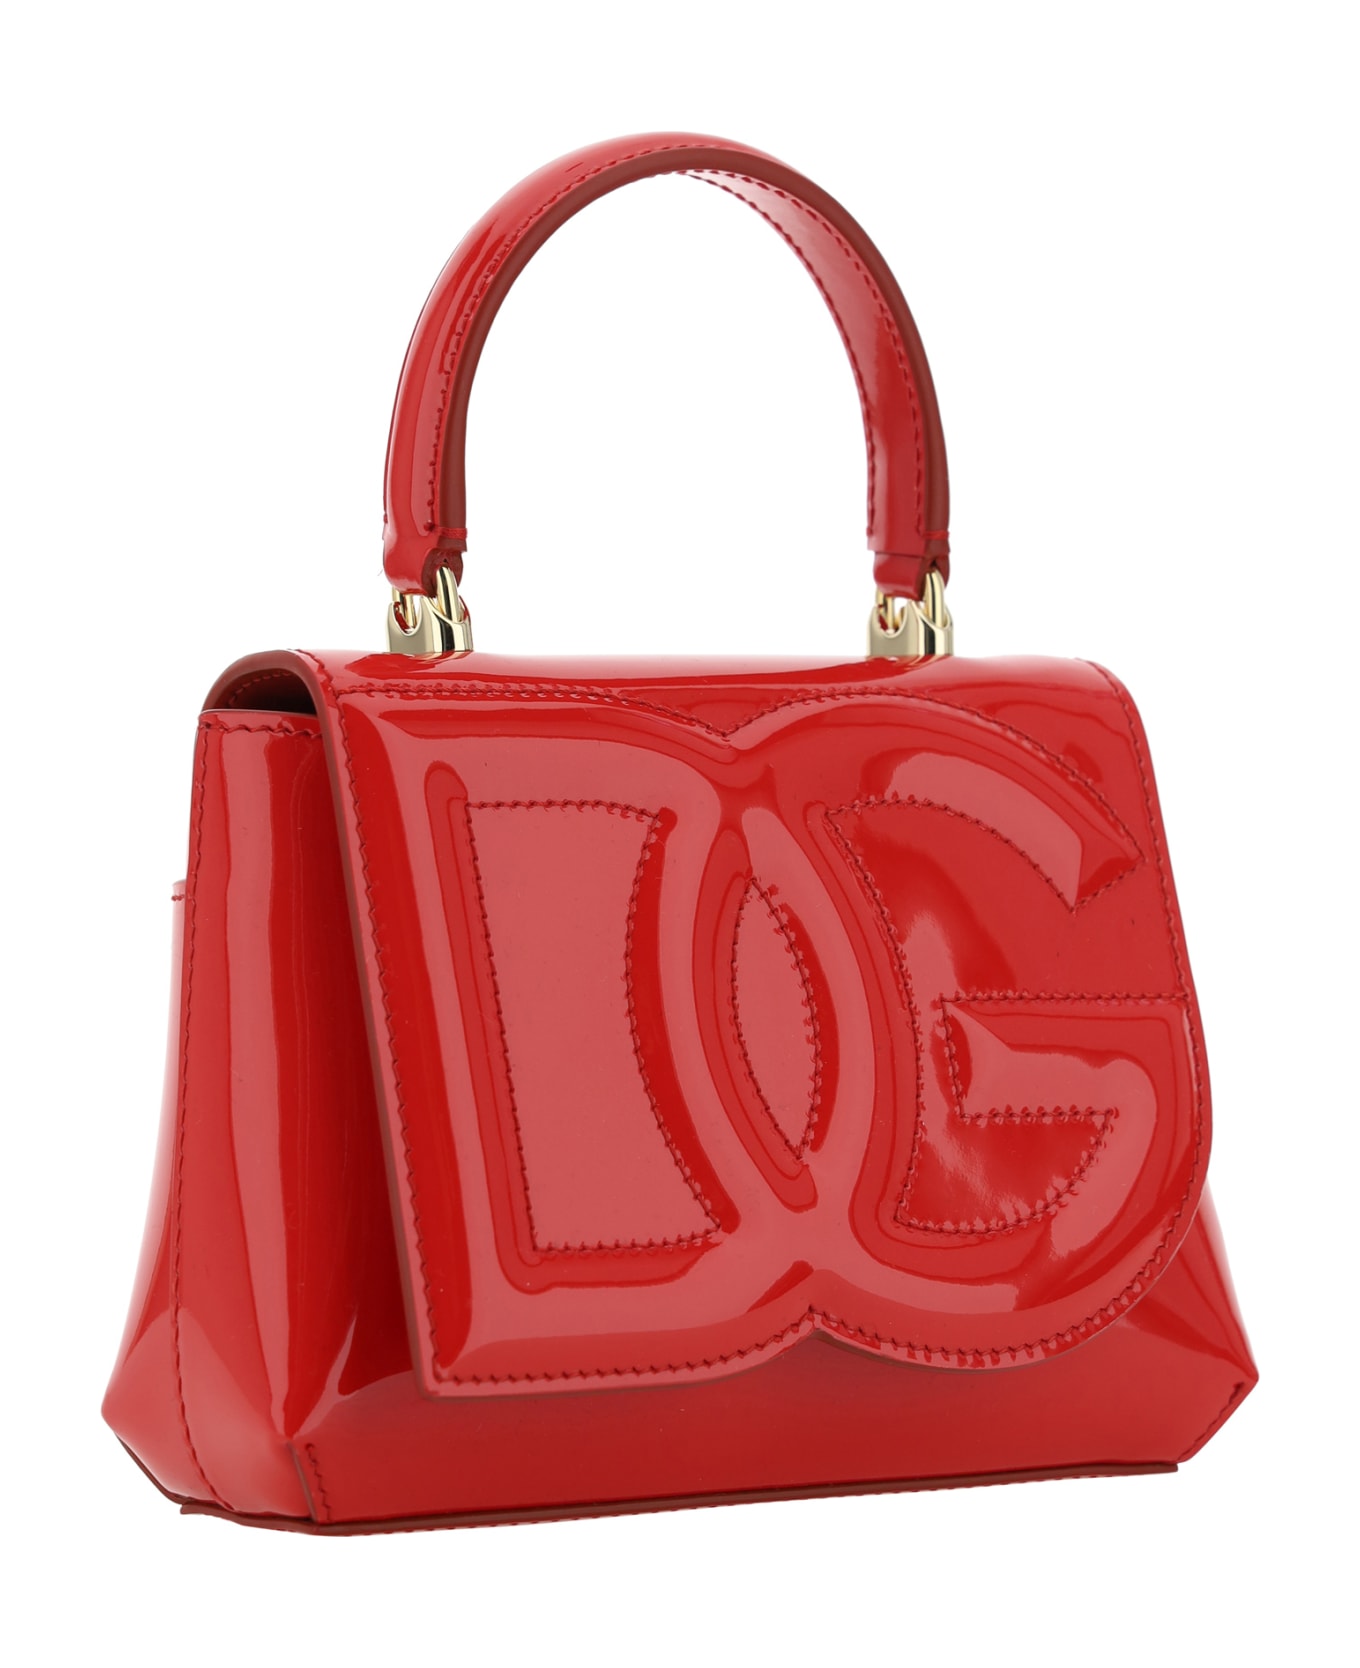 Dolce & Gabbana 'dg' Handbag - Rosso 2 トートバッグ